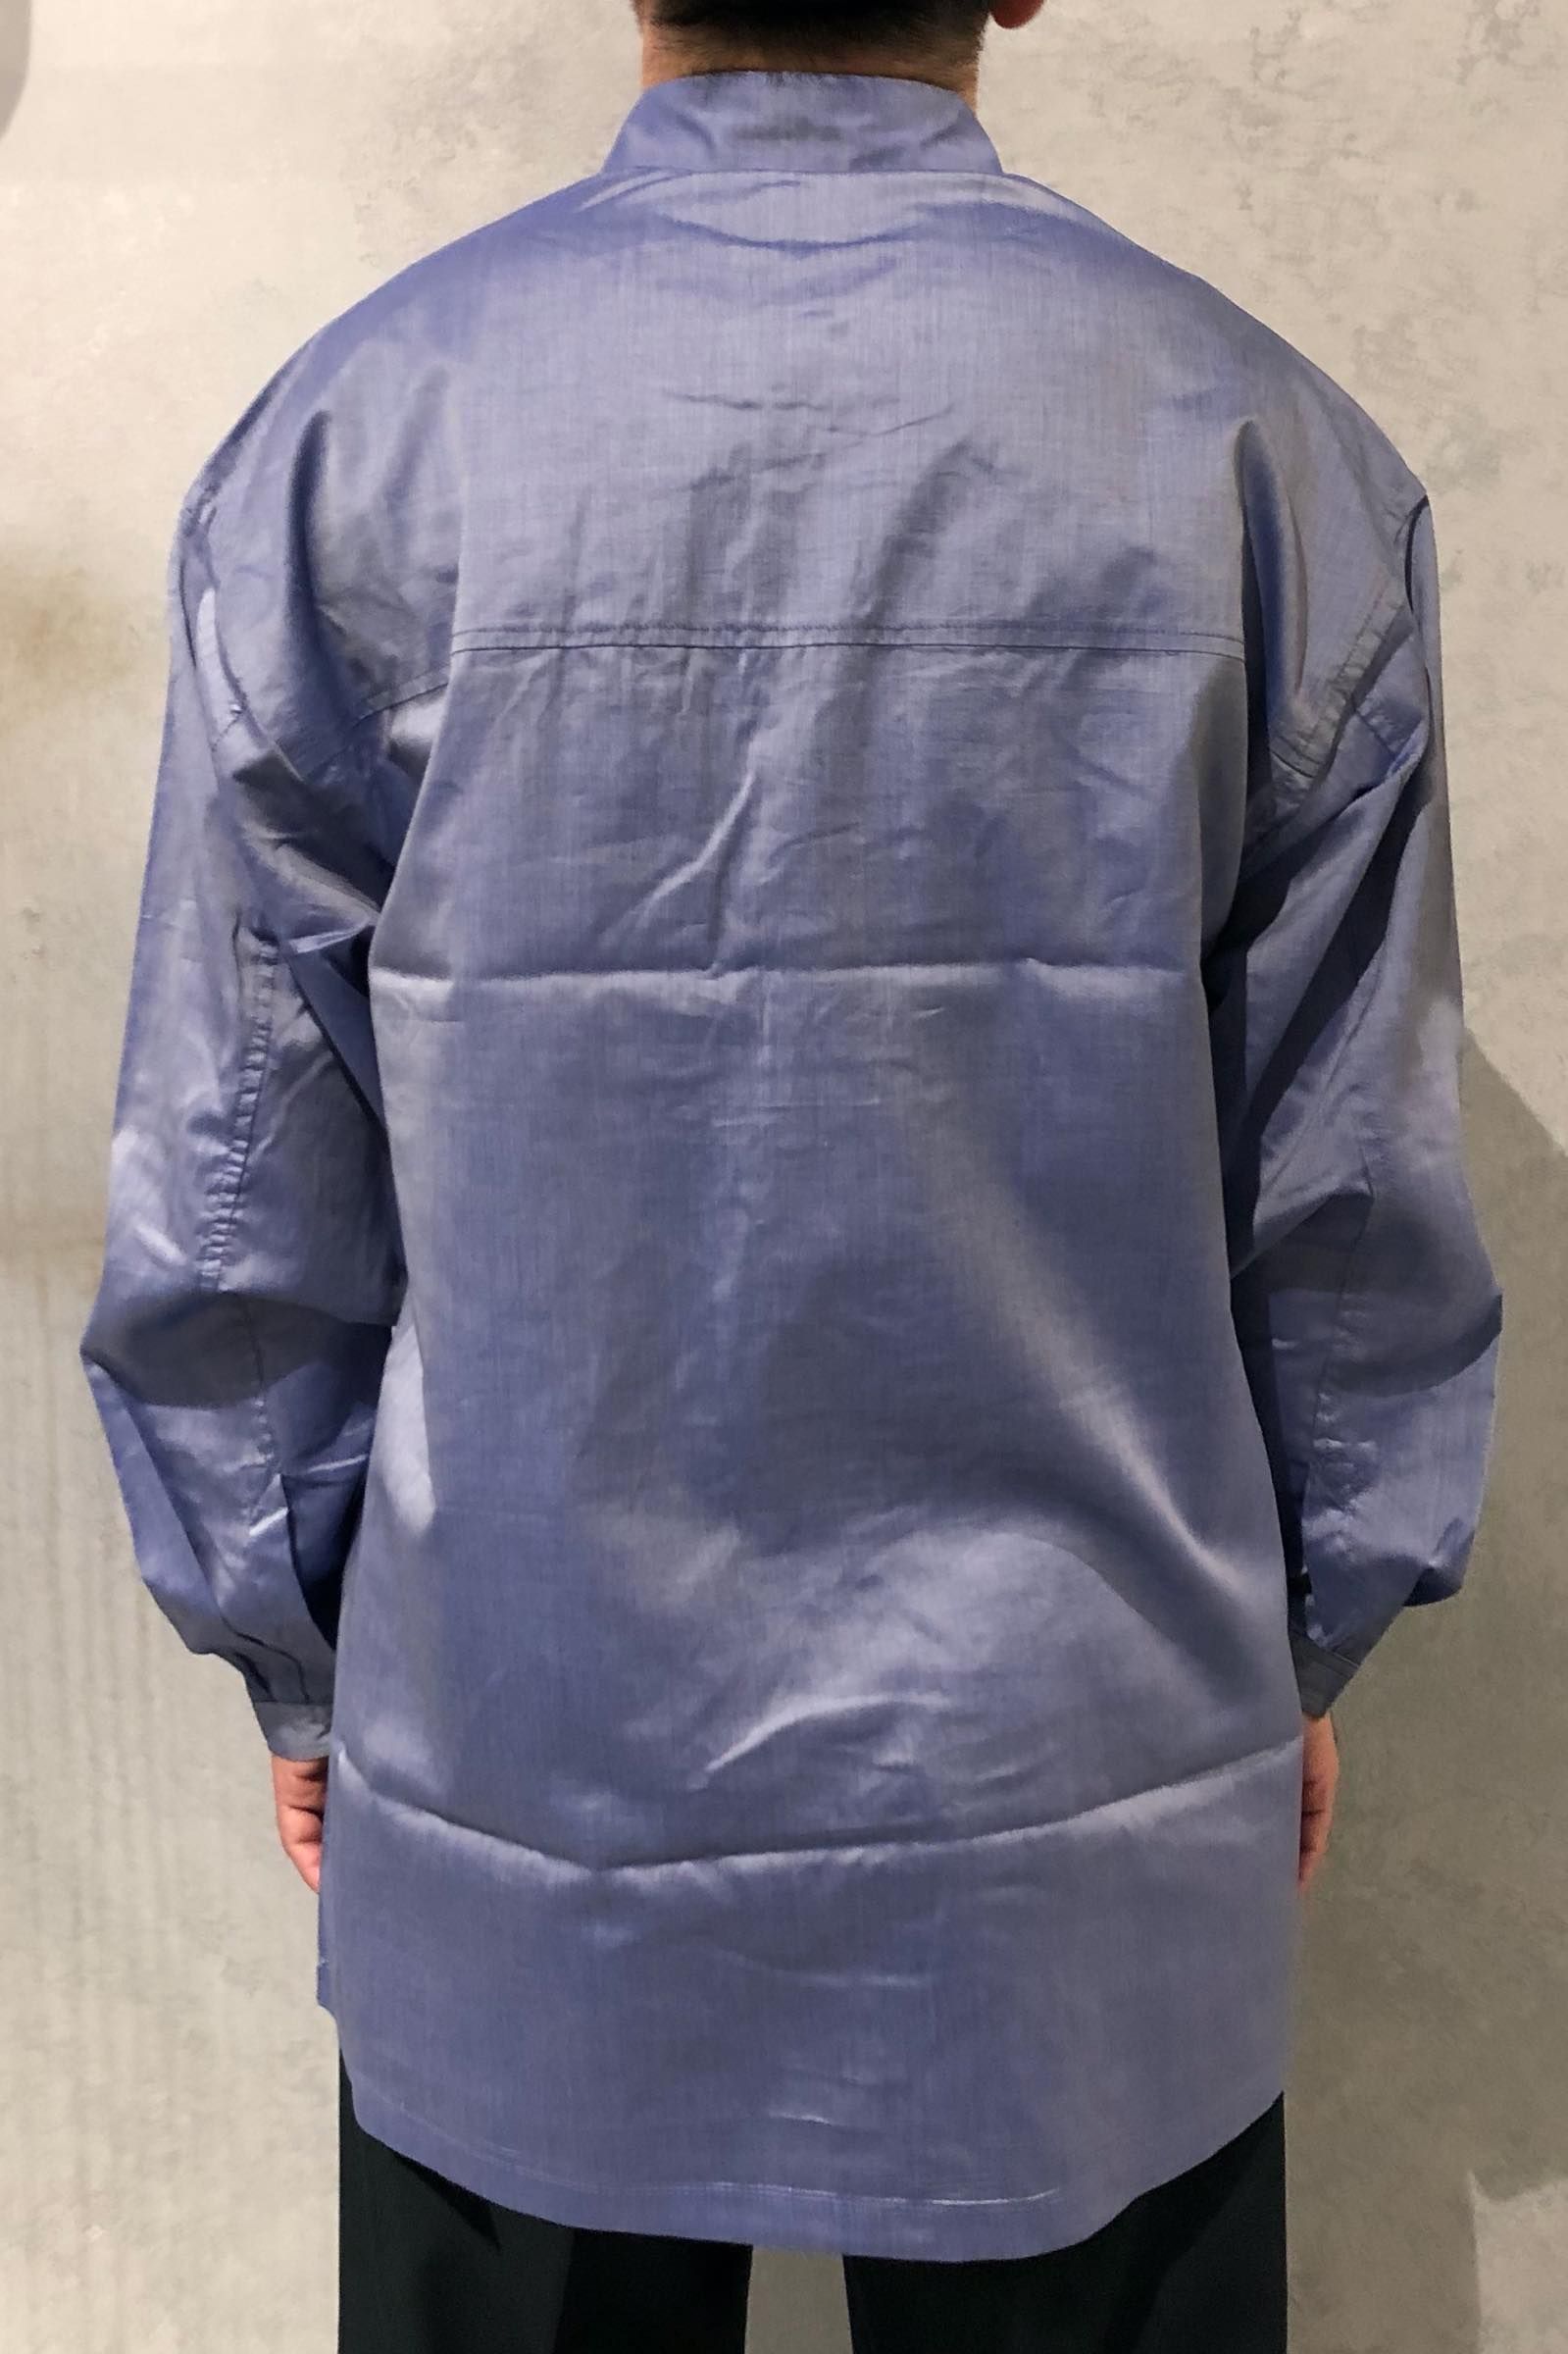 E.TAUTZ - core lineman shirts denim blue 21aw | asterisk